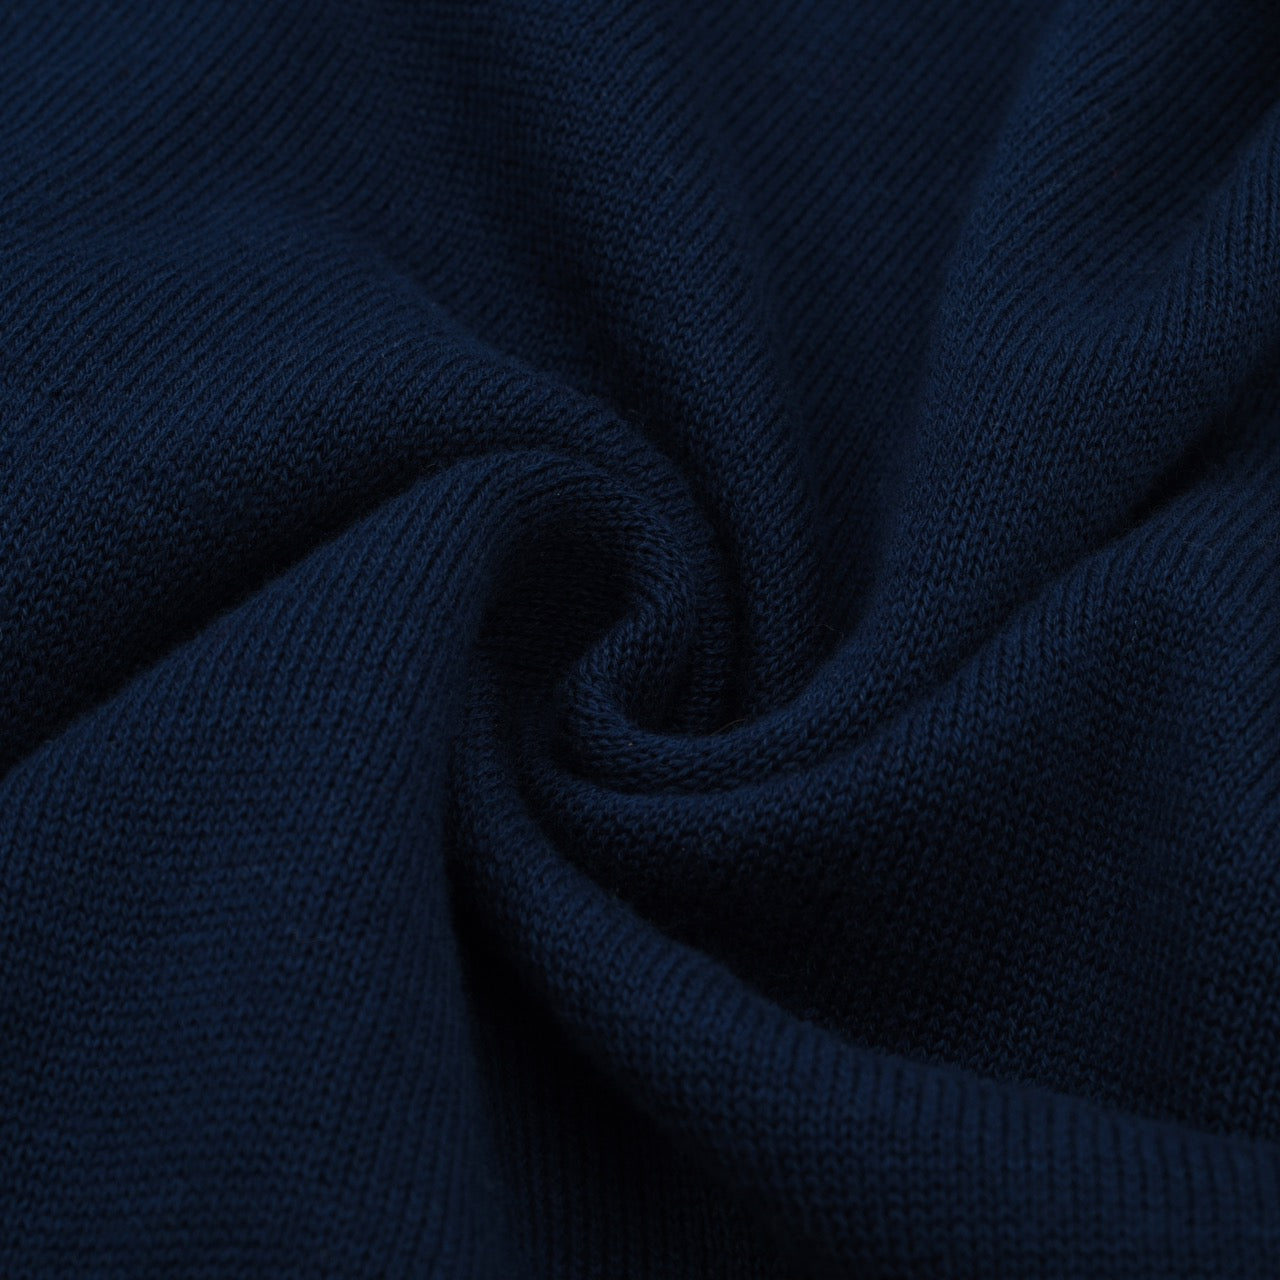 OXKNIT Men Vintage Clothing 1960s Mod Style Racing Stripe Dark Blue Knit Zip Retro Cardigan